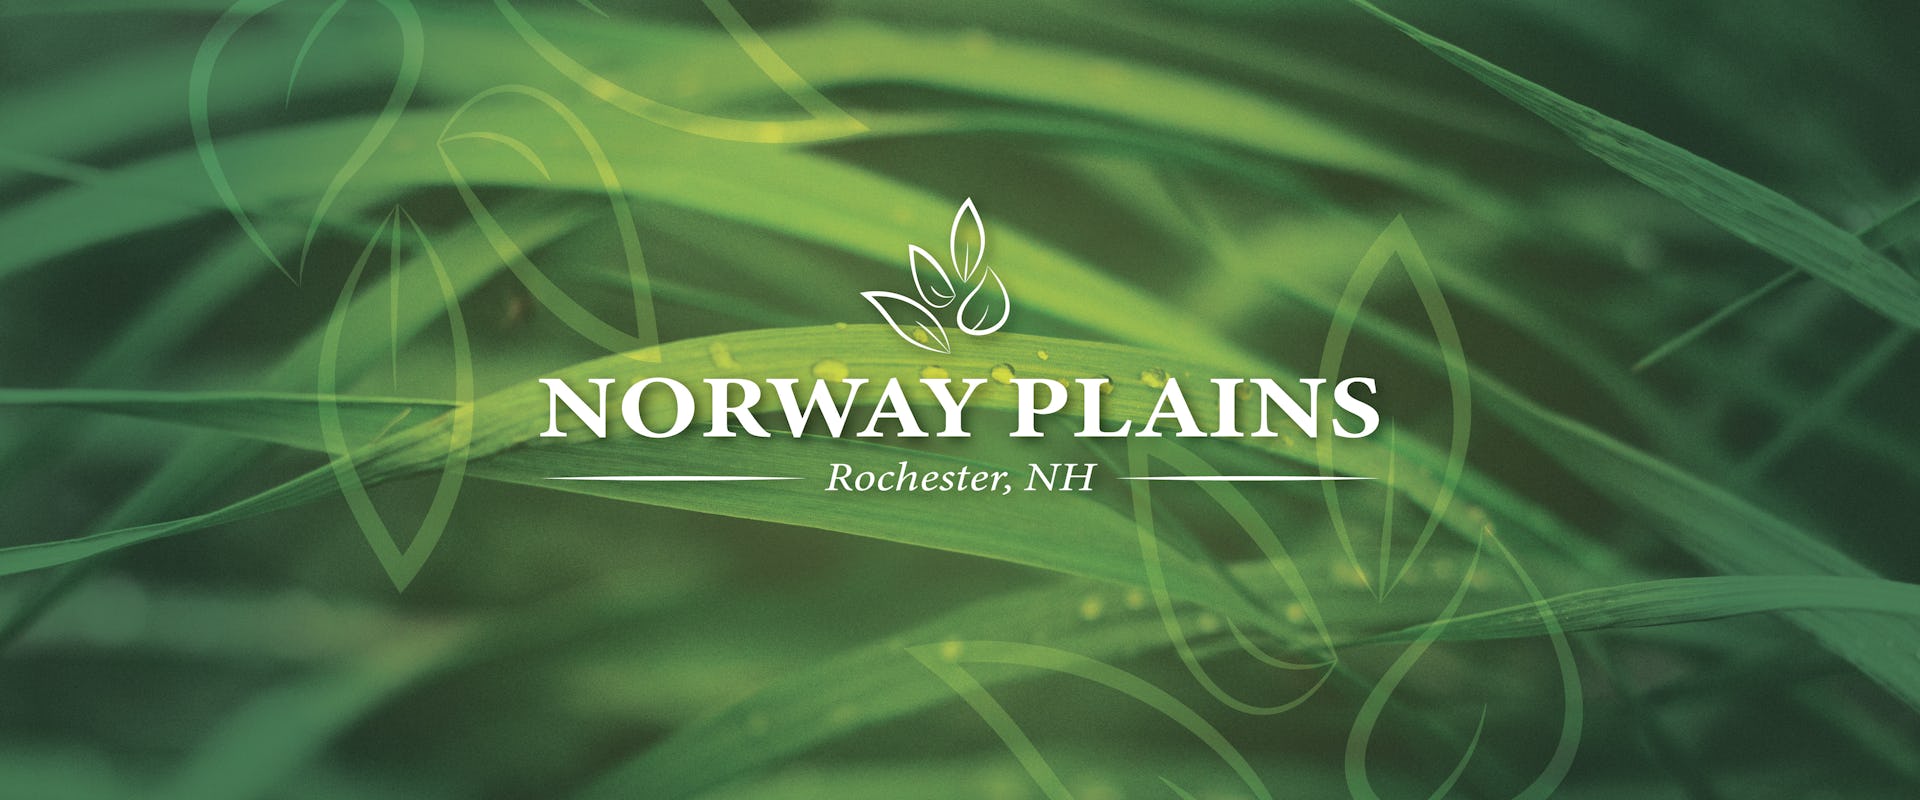 Norwayh Plains - site header.jpg